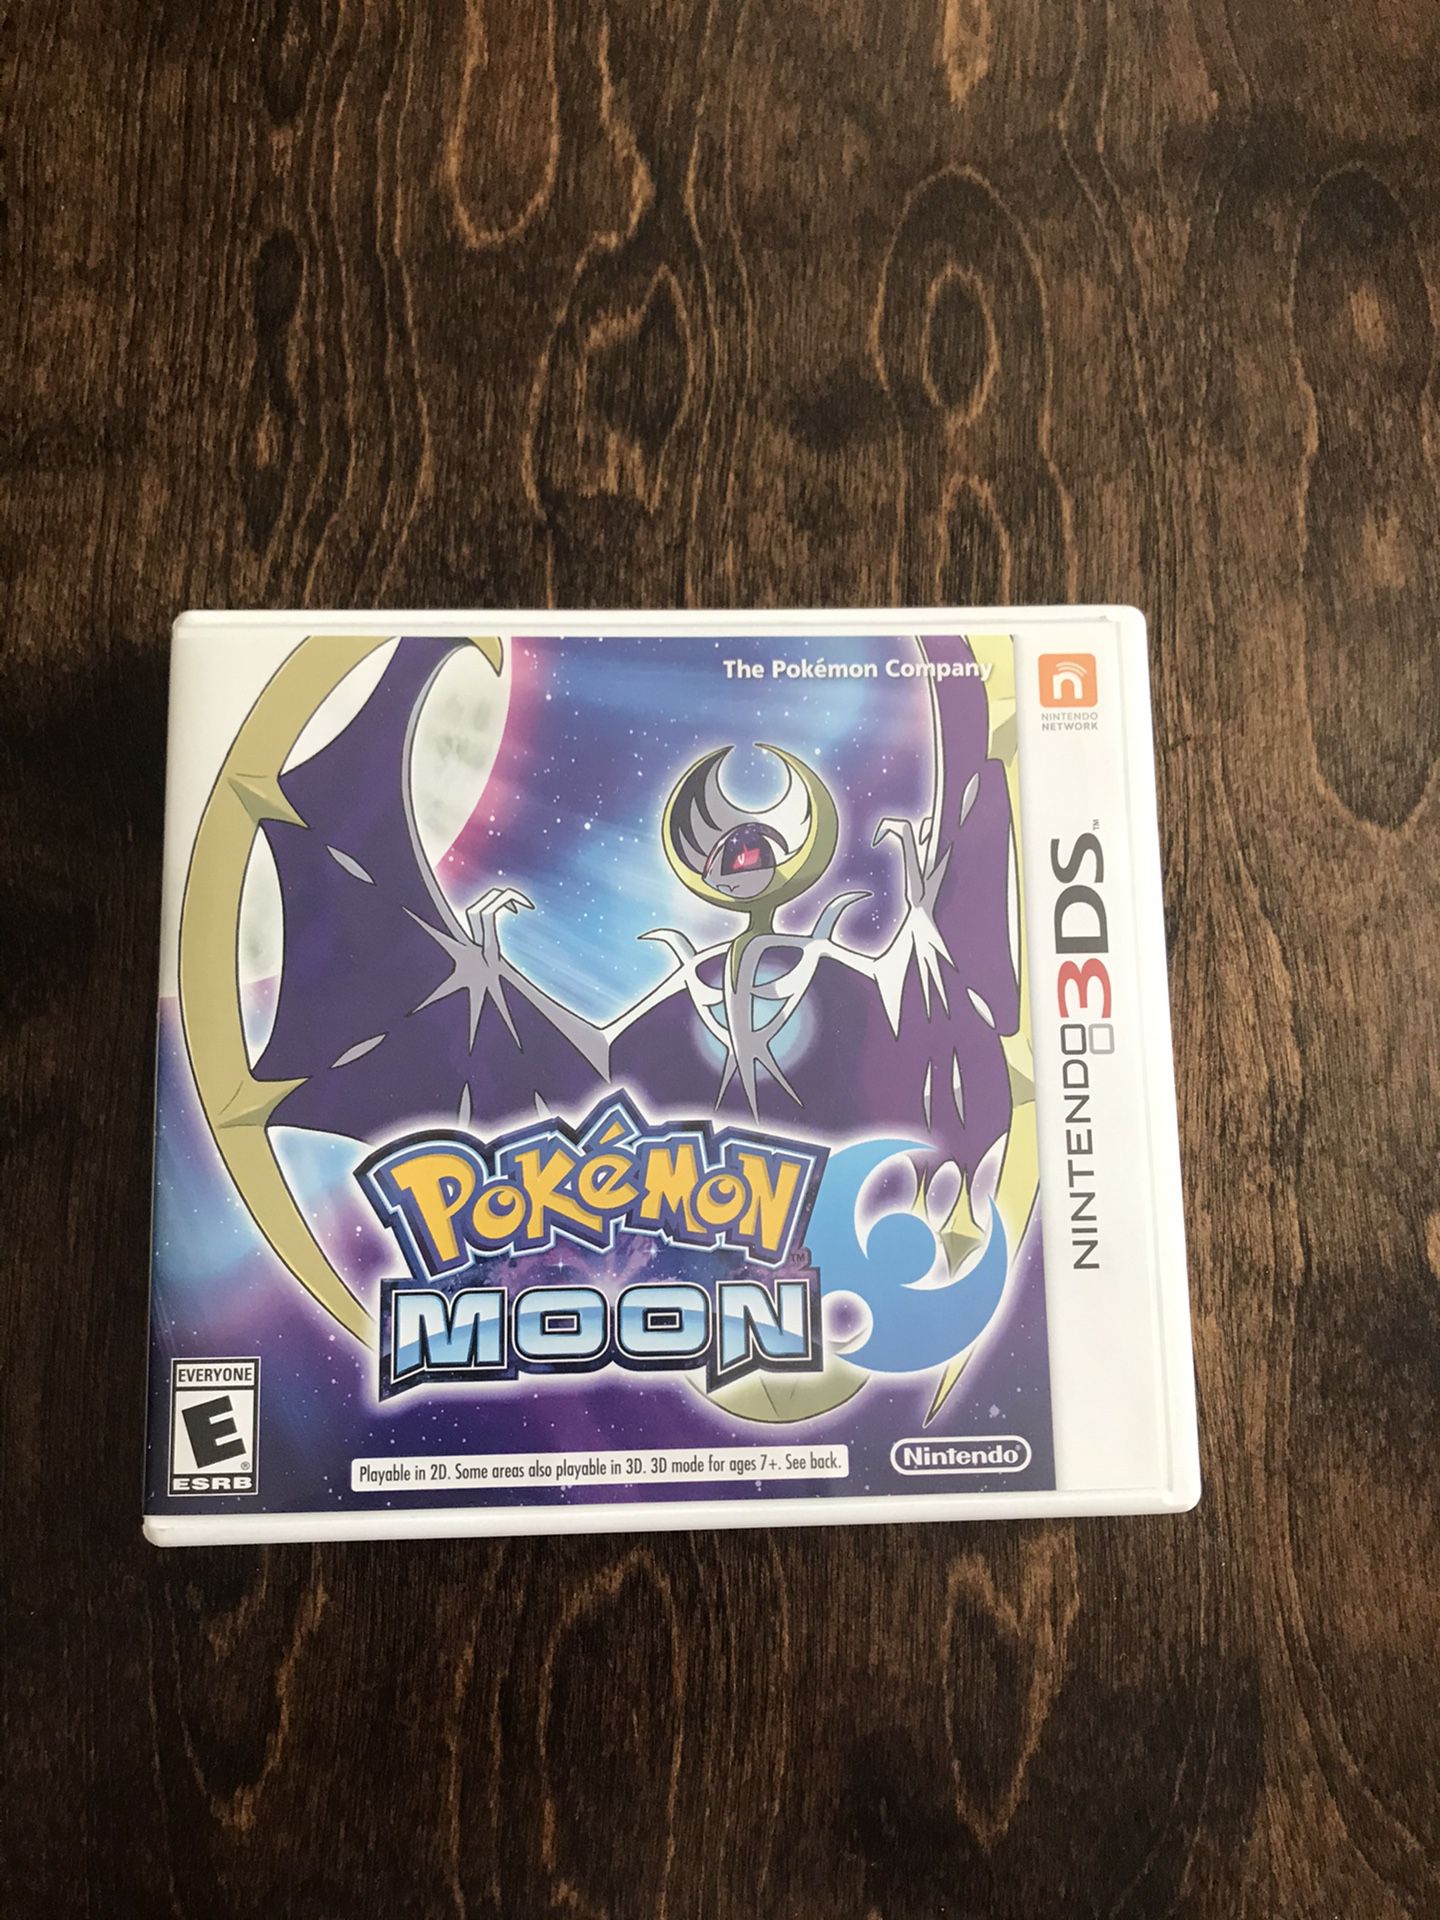 Nintendo Pokémon Moon for the Nintendo 3DS